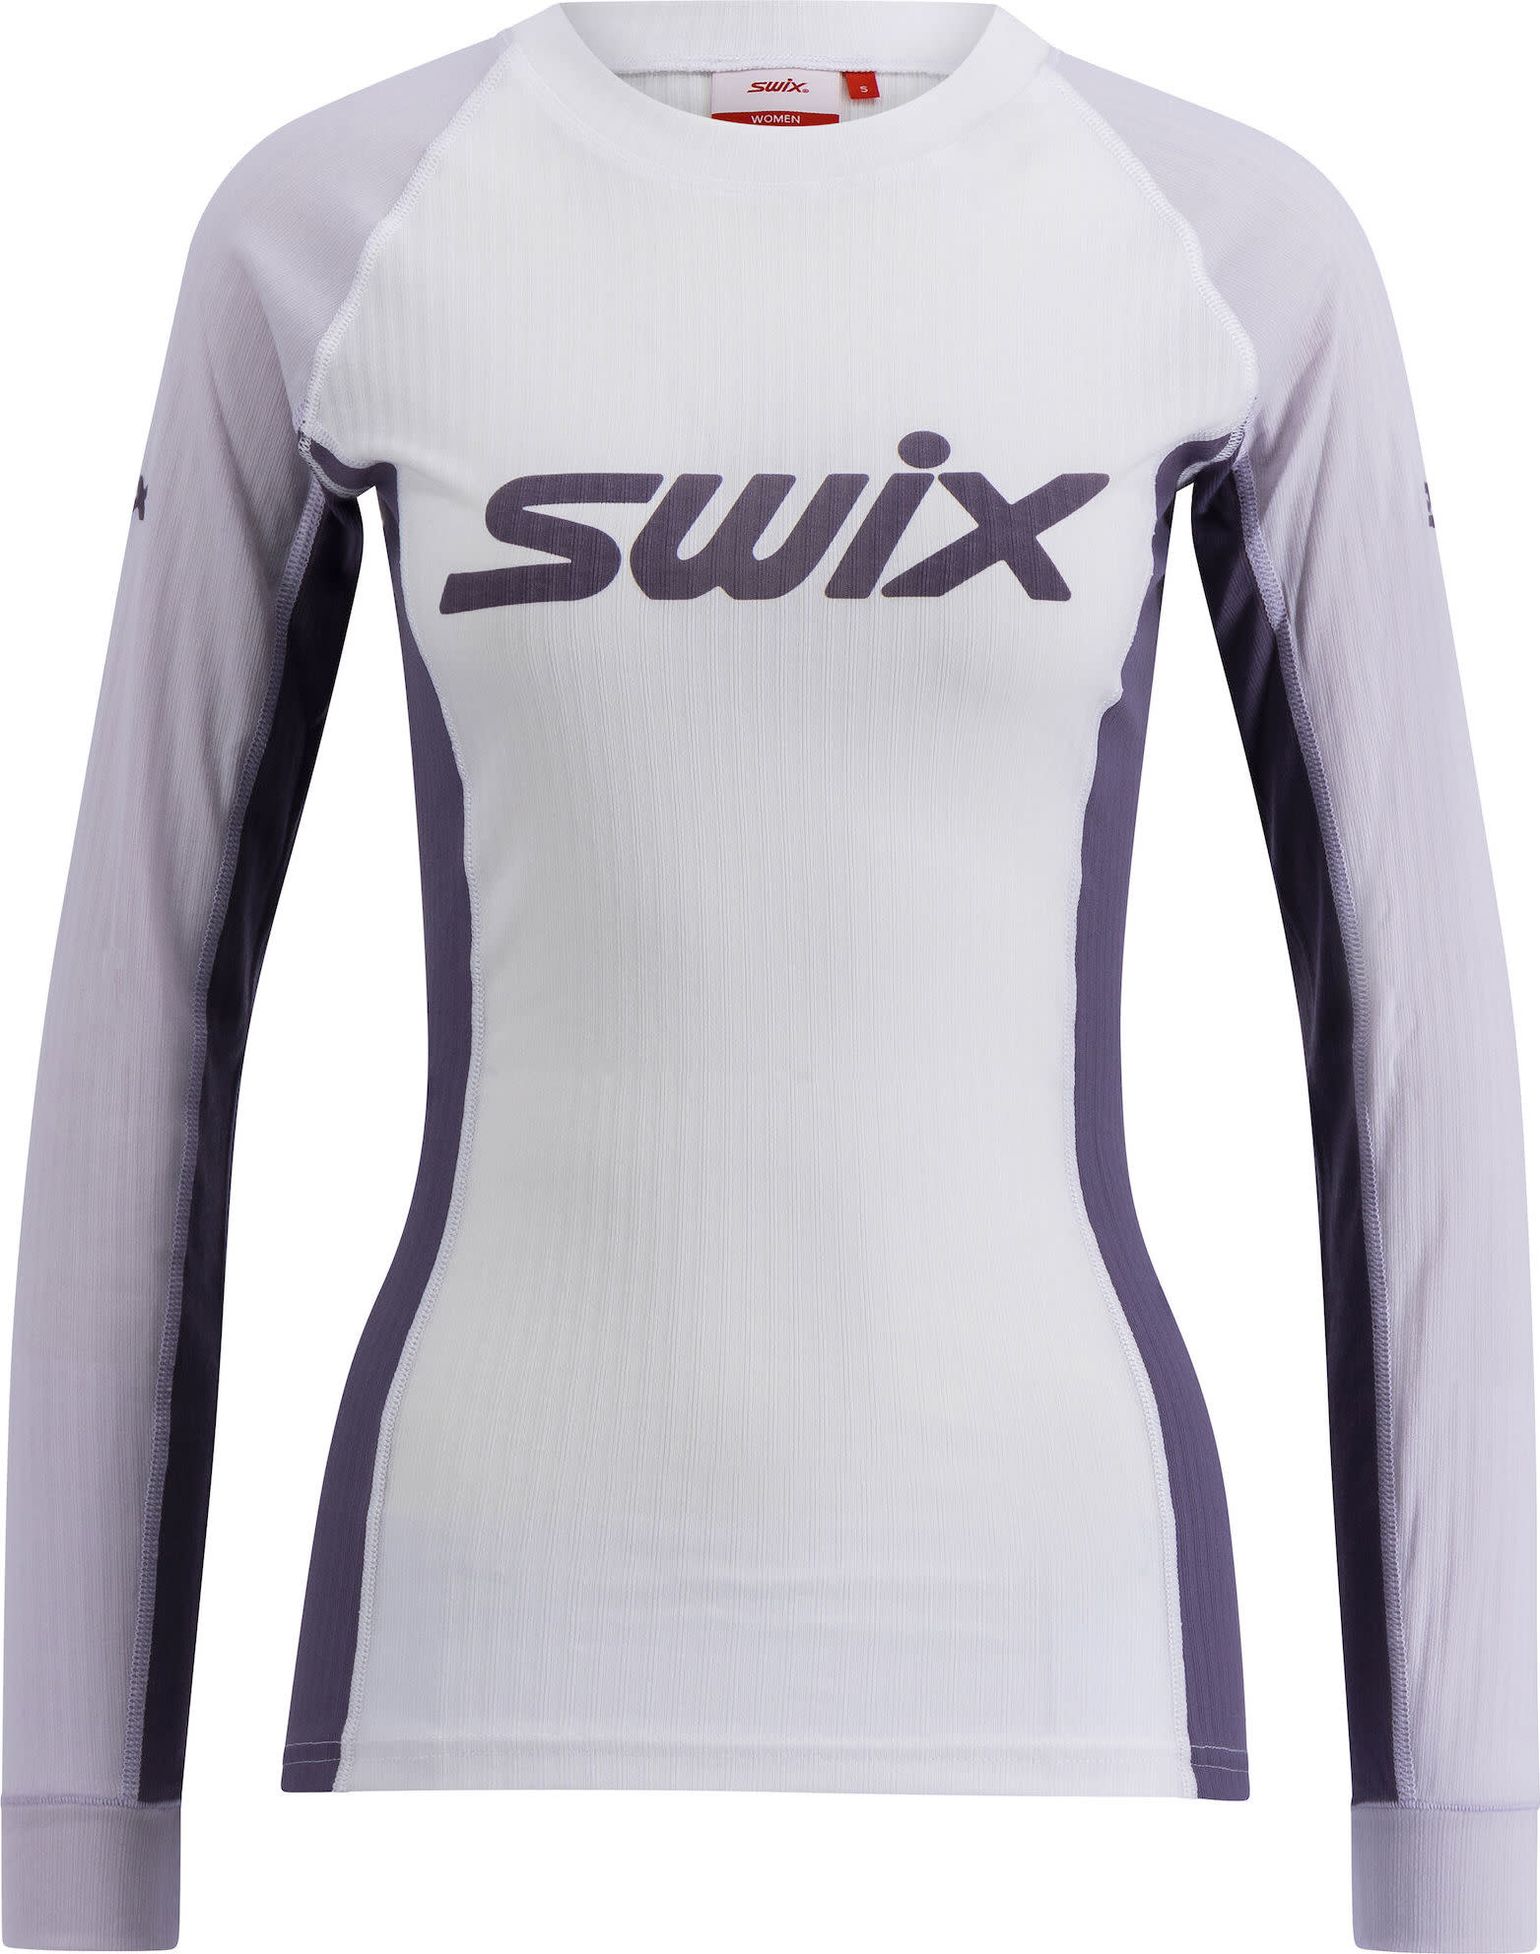 Women's RaceX Classic Long Sleeve Bright White/ Dusty purple